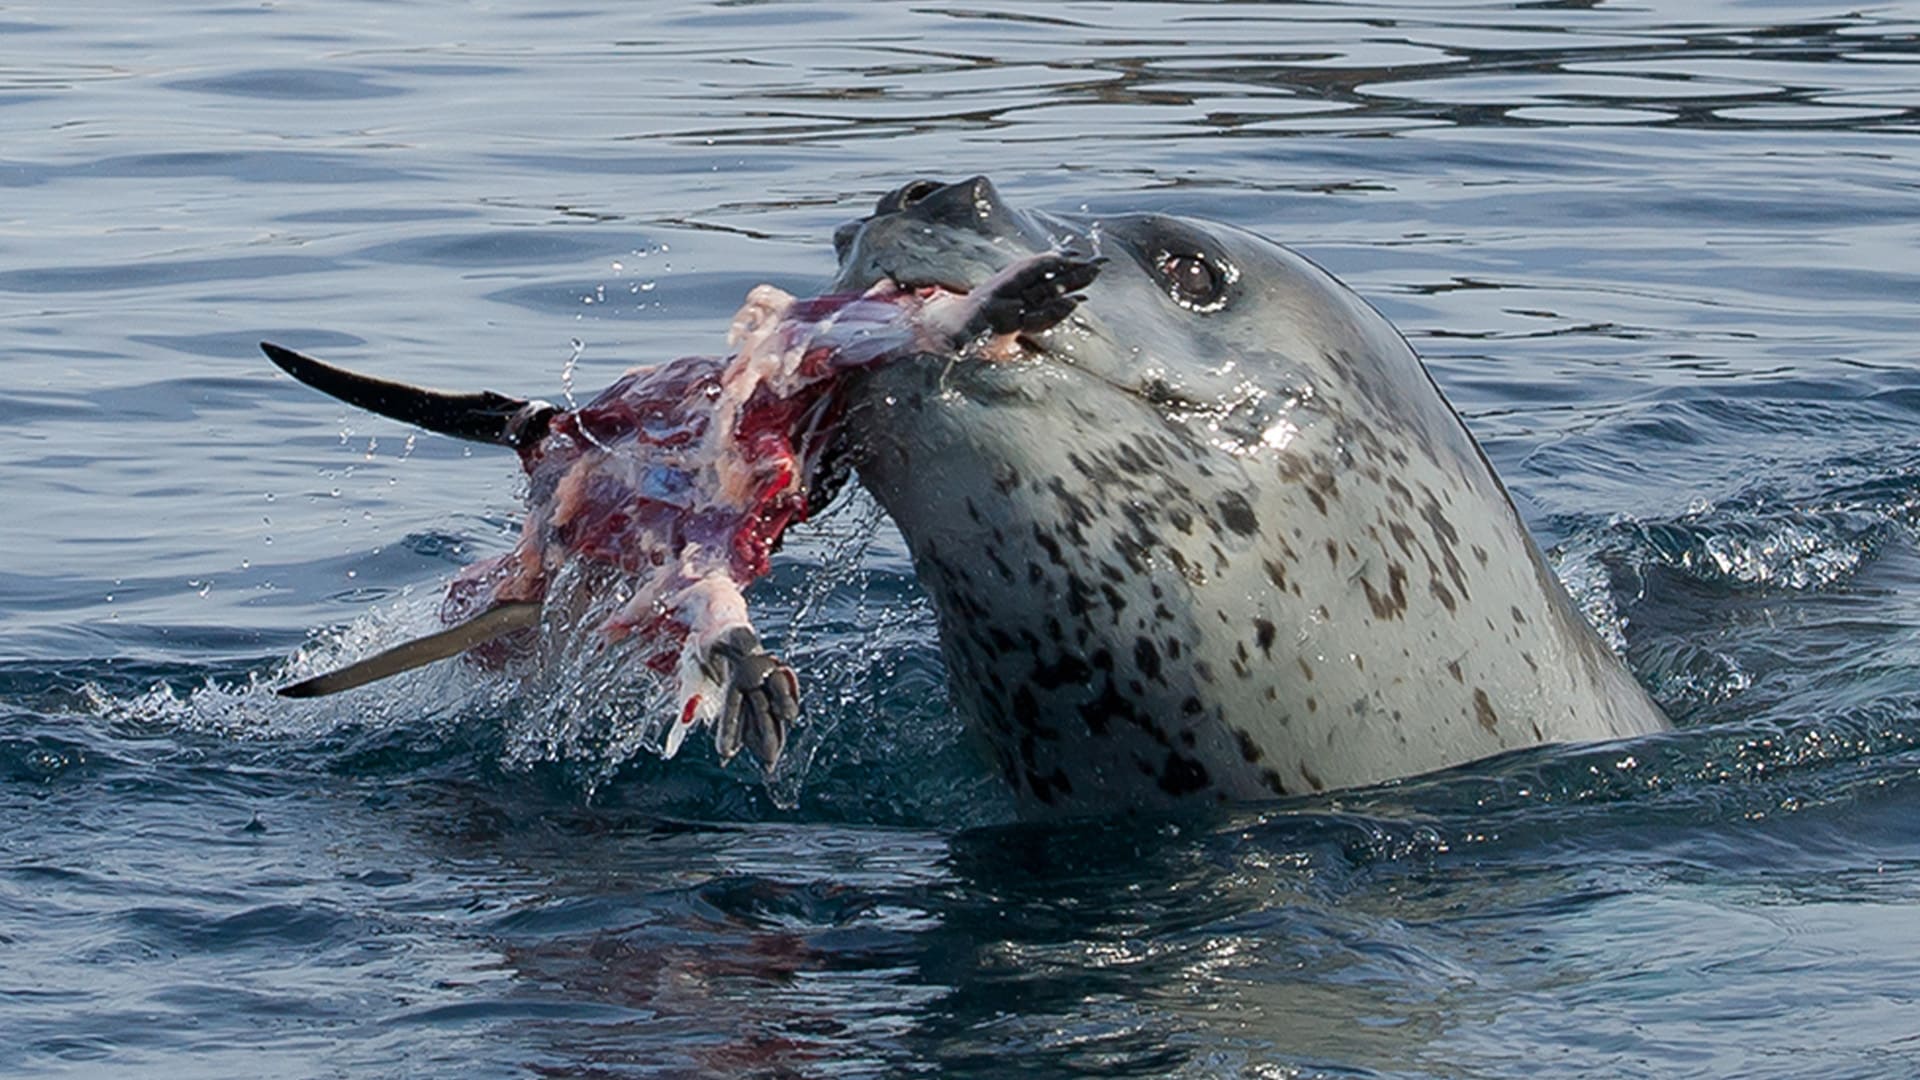 Tuleň leopardí při úspěšném lovu